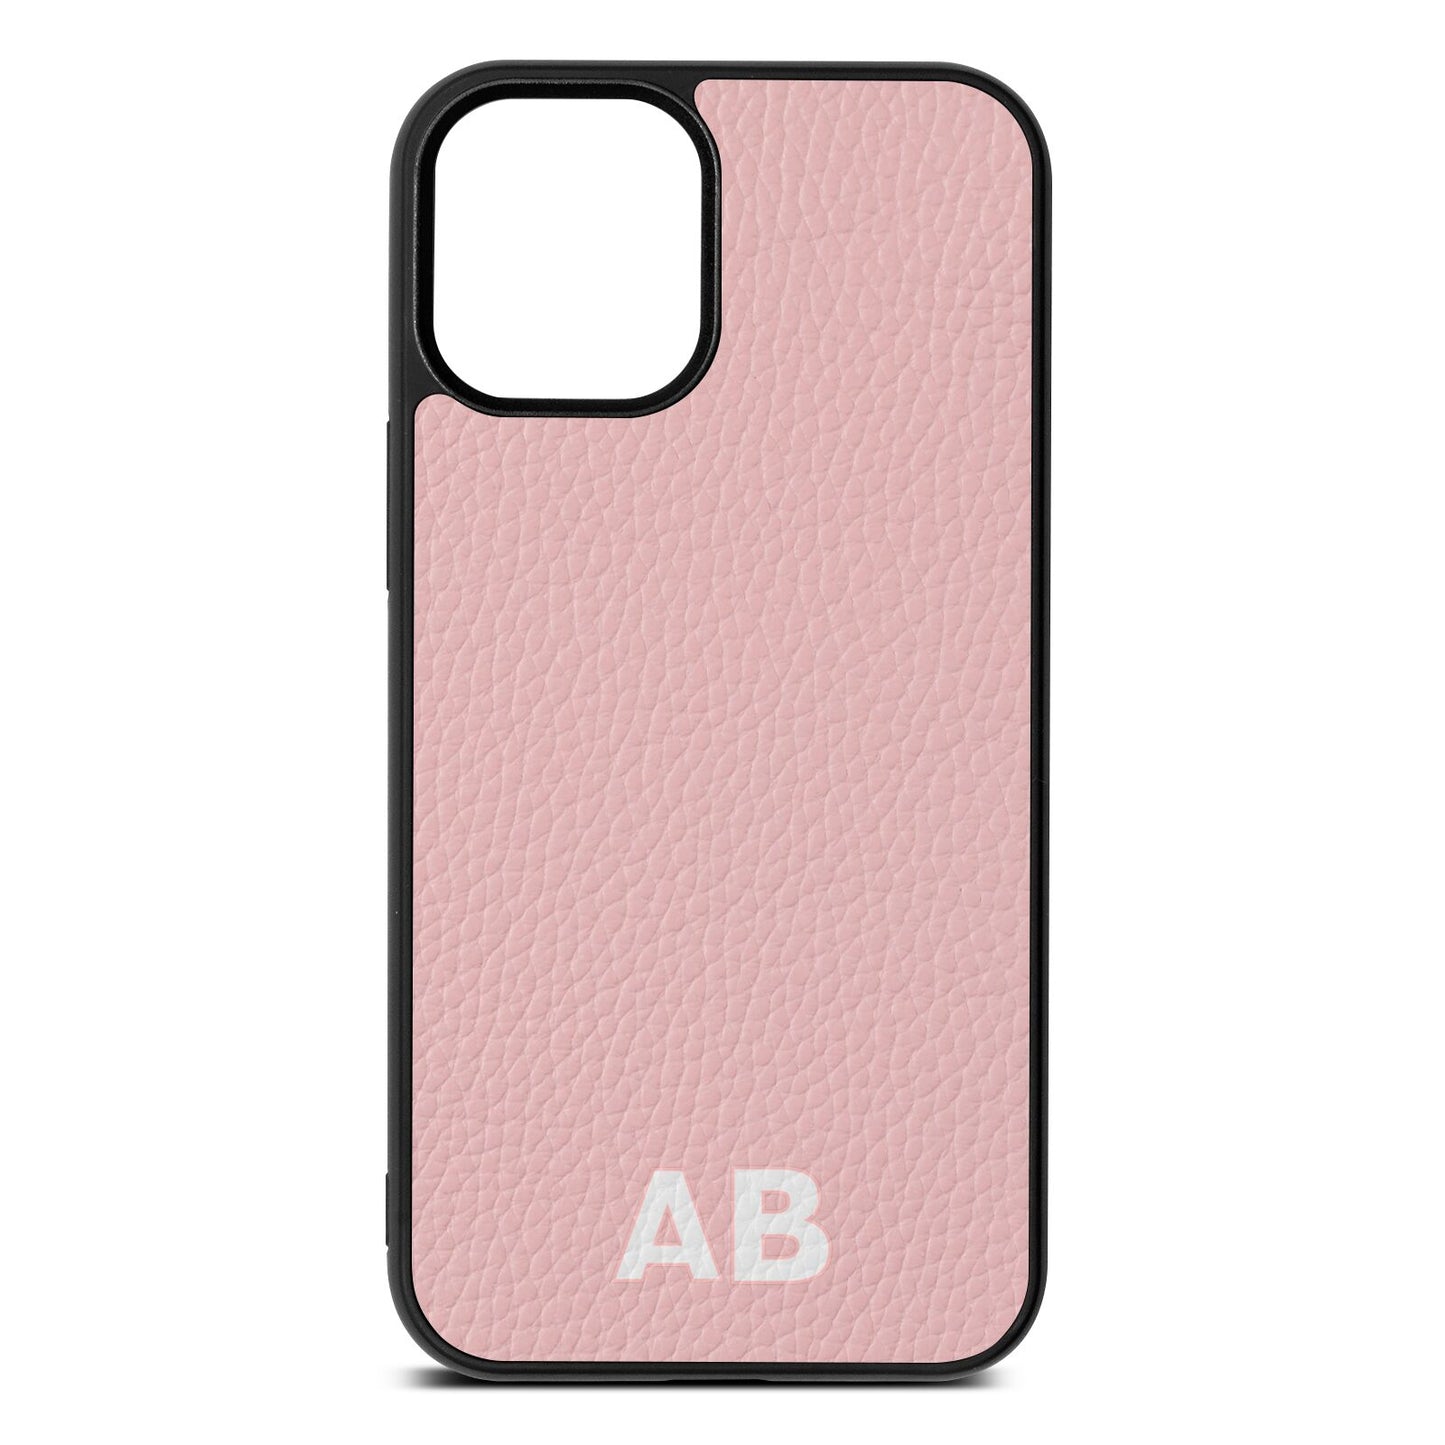 Sans Serif Initials Pink Pebble Leather iPhone 12 Mini Case